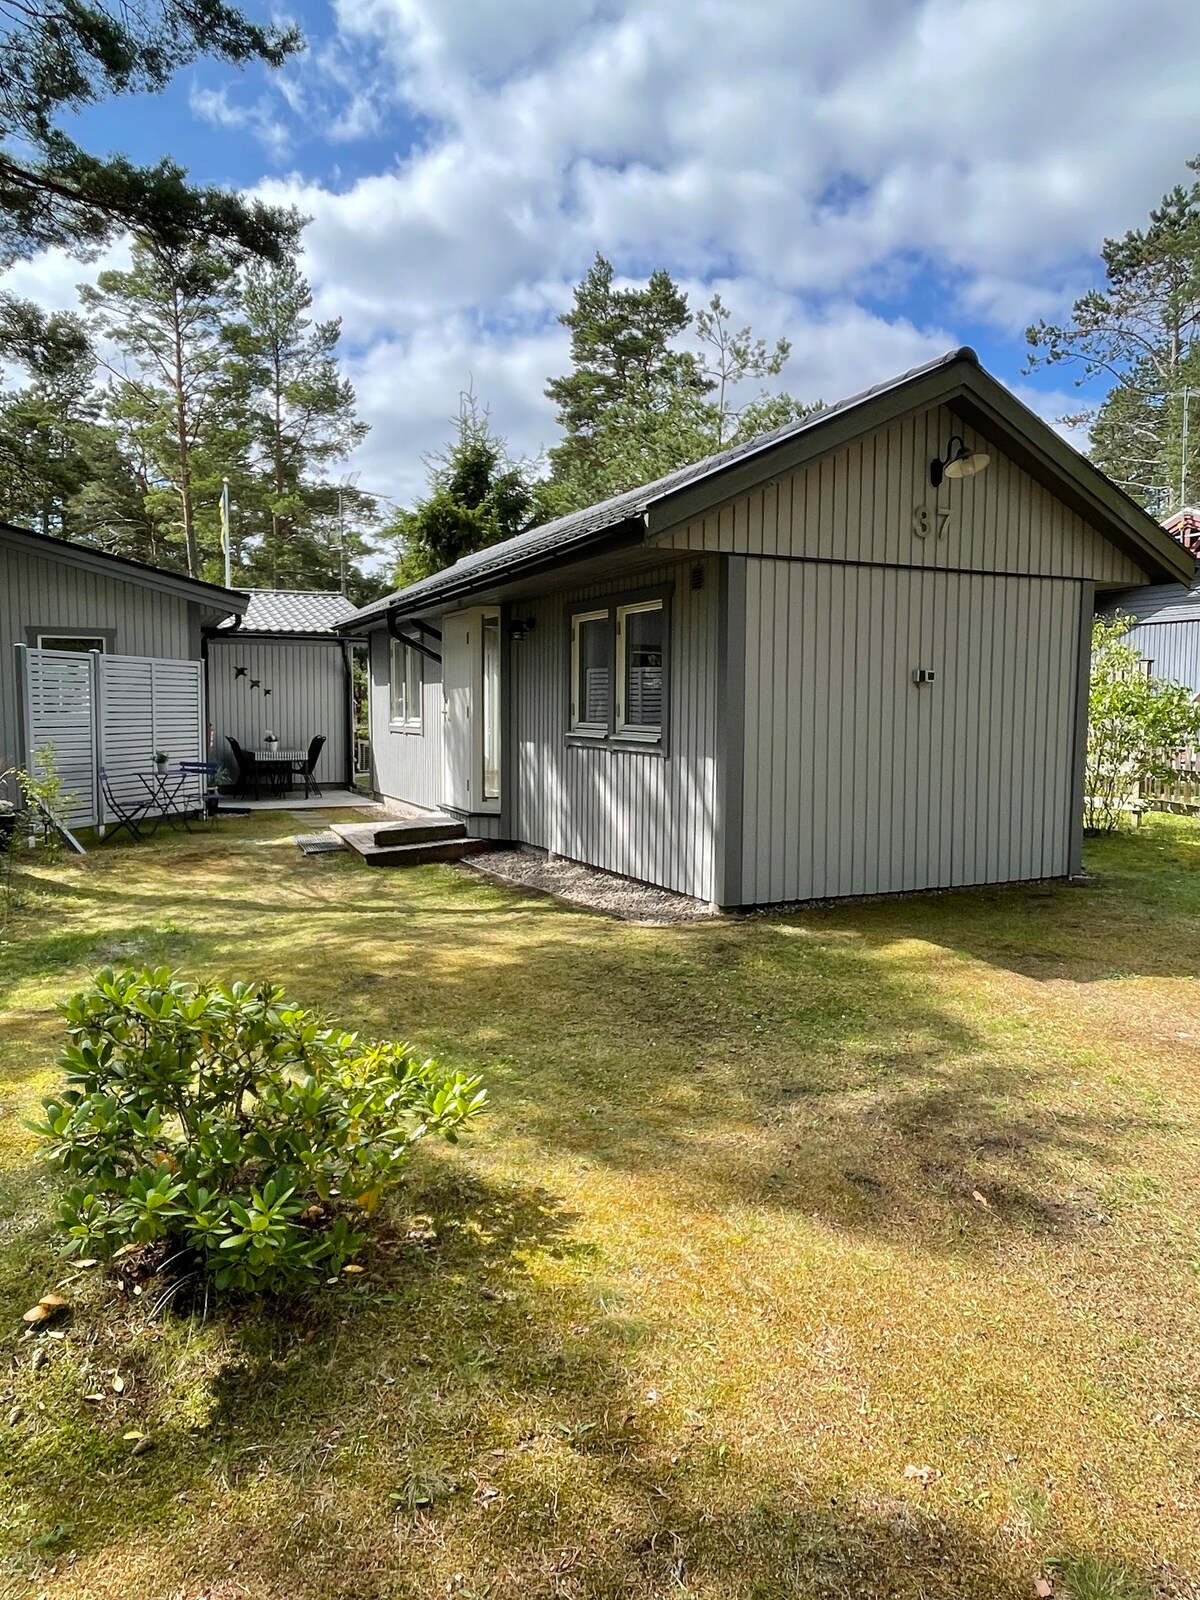 Yngsjö大海附近松林中的客用小屋